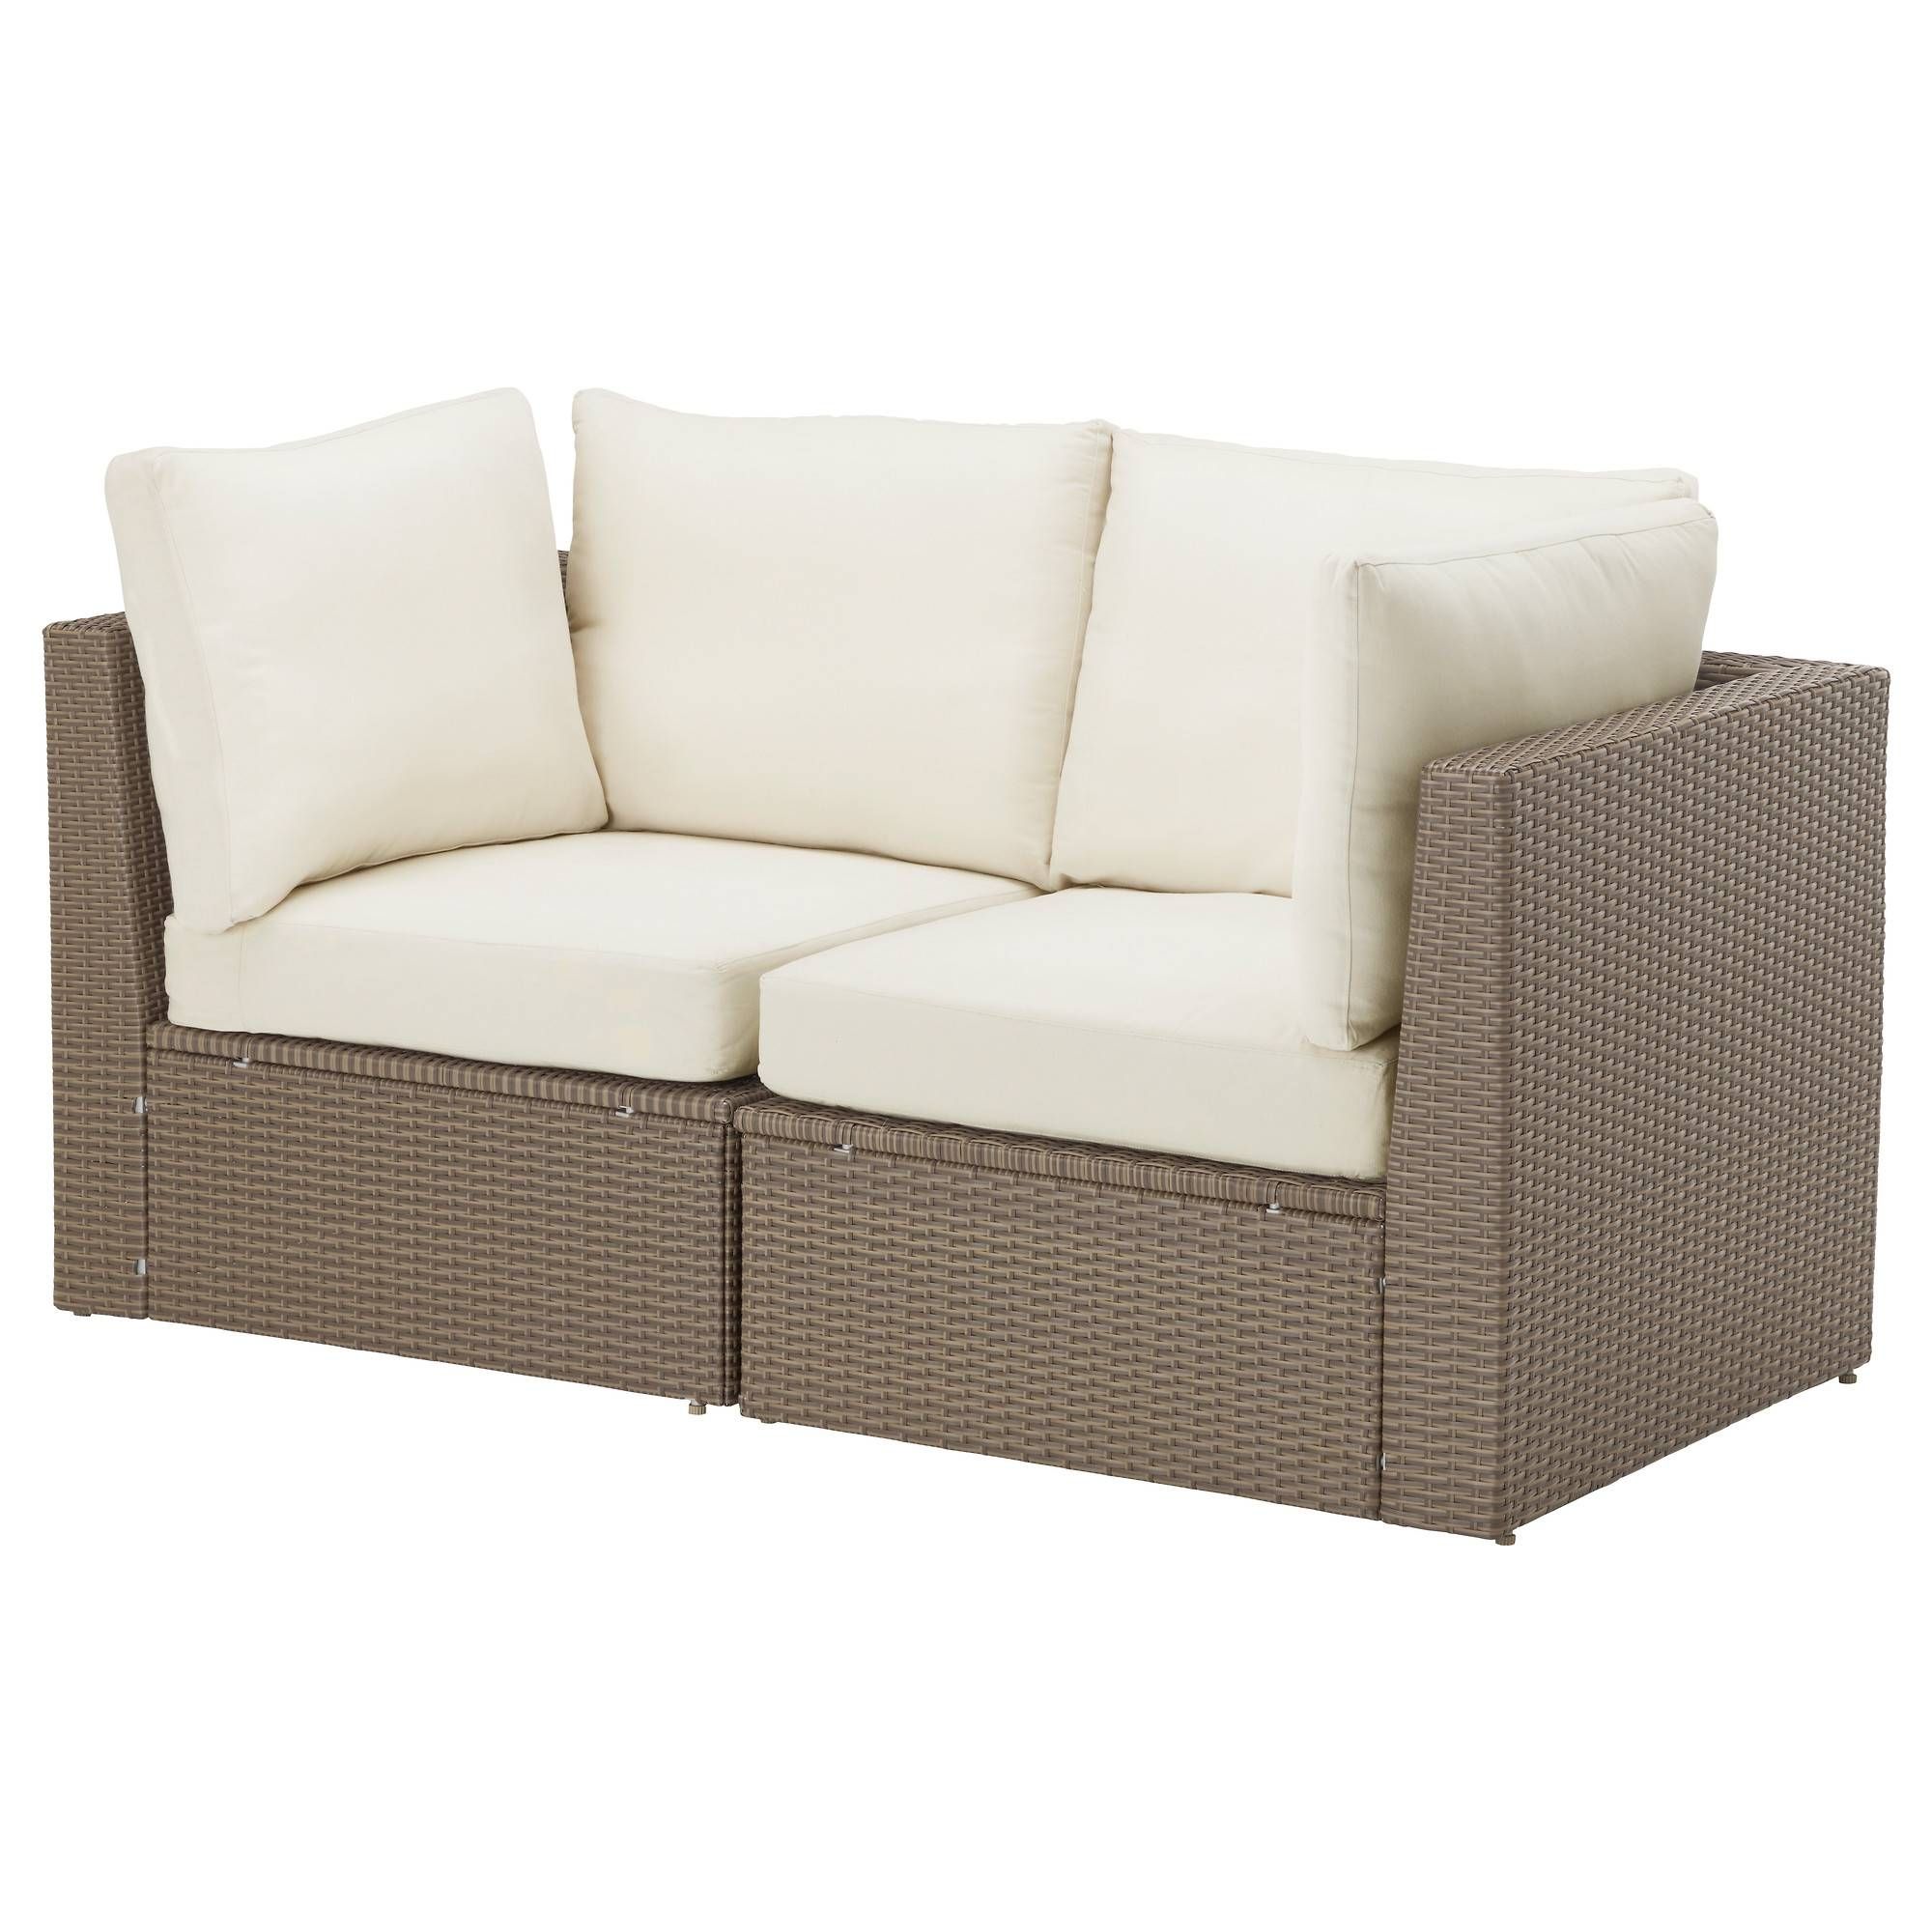 Arholma 2 Seat Sofa, Outdoor Brown/beige 152x76x66 Cm – Ikea Within Sofa Chairs Ikea (View 3 of 30)